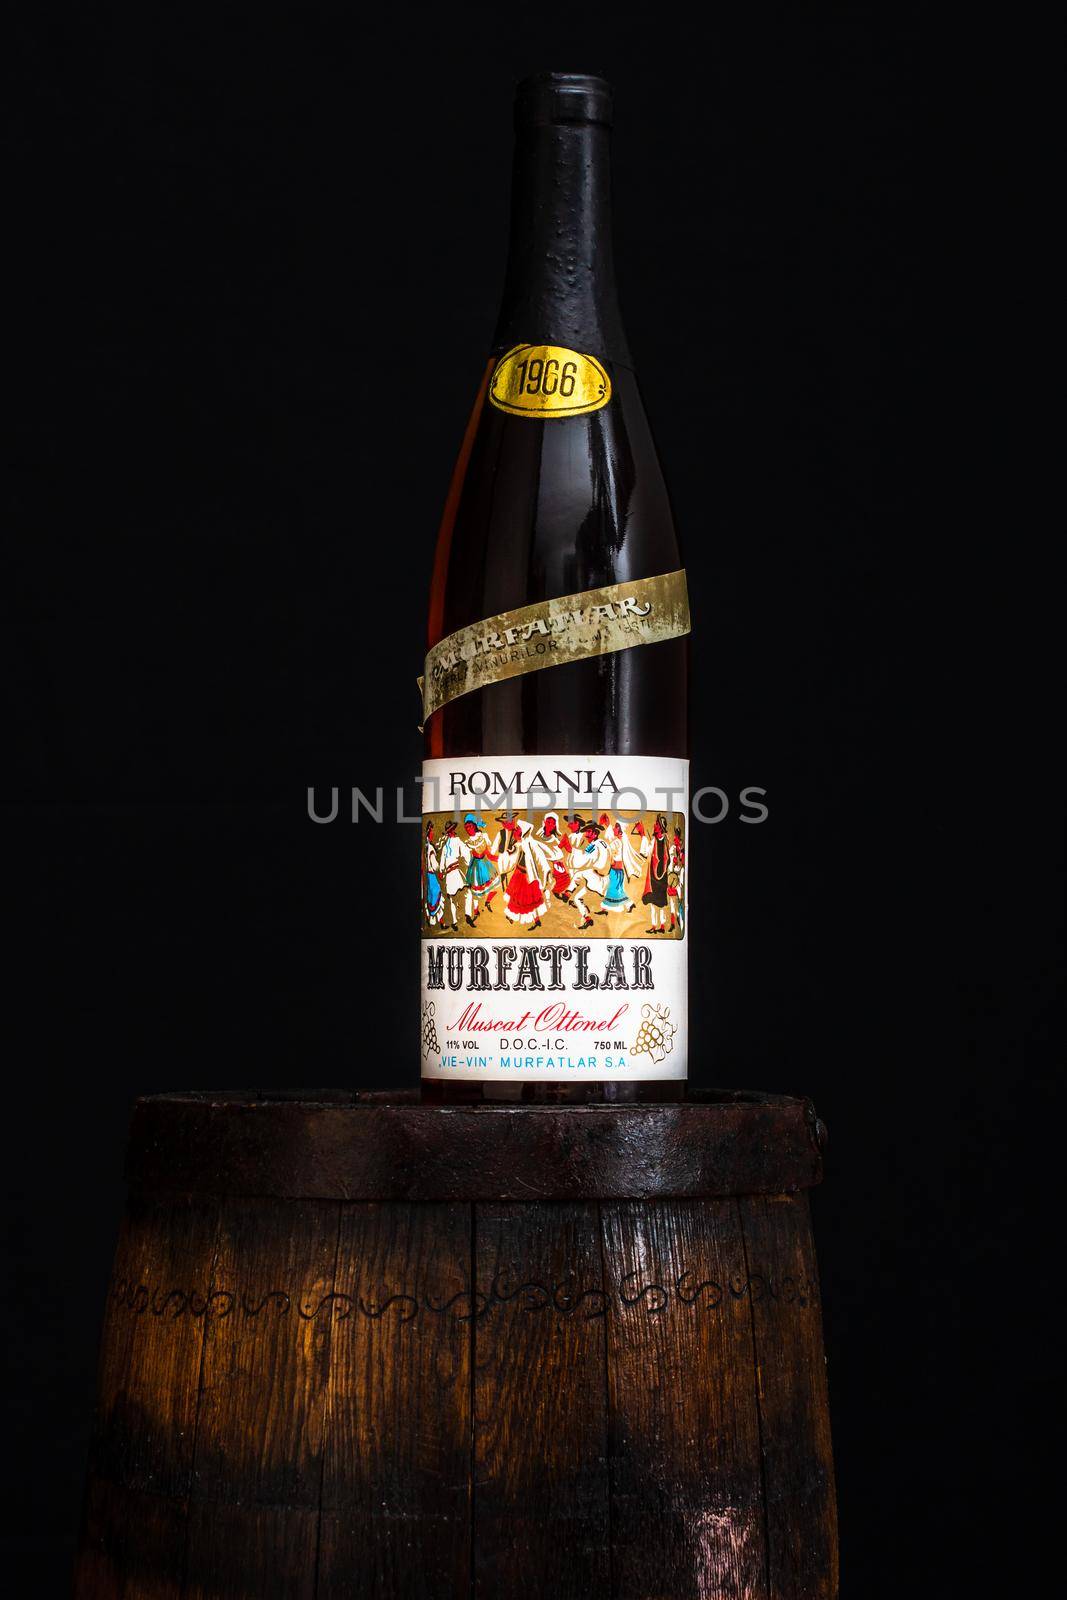 Vintage Murfatlar wine bottle on wooden barrel with dark background. Illustrative editorial photo Bucharest, Romania, 2021 by vladispas